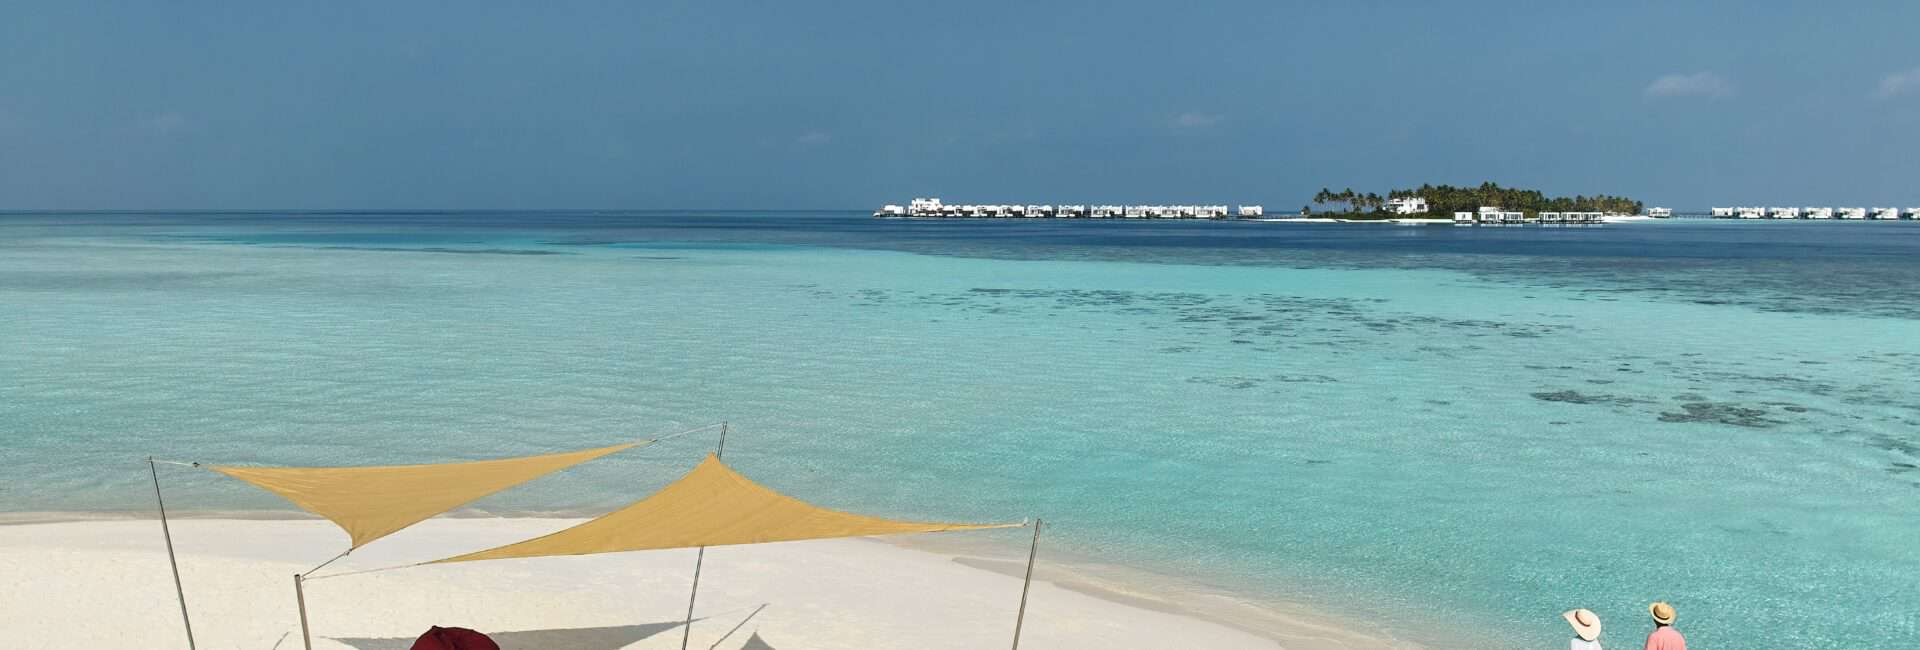 Jumeirah Maldives_High_resolution_300dpi-Jumeirah Maldives - Sandbank Destination Dining Couple 2